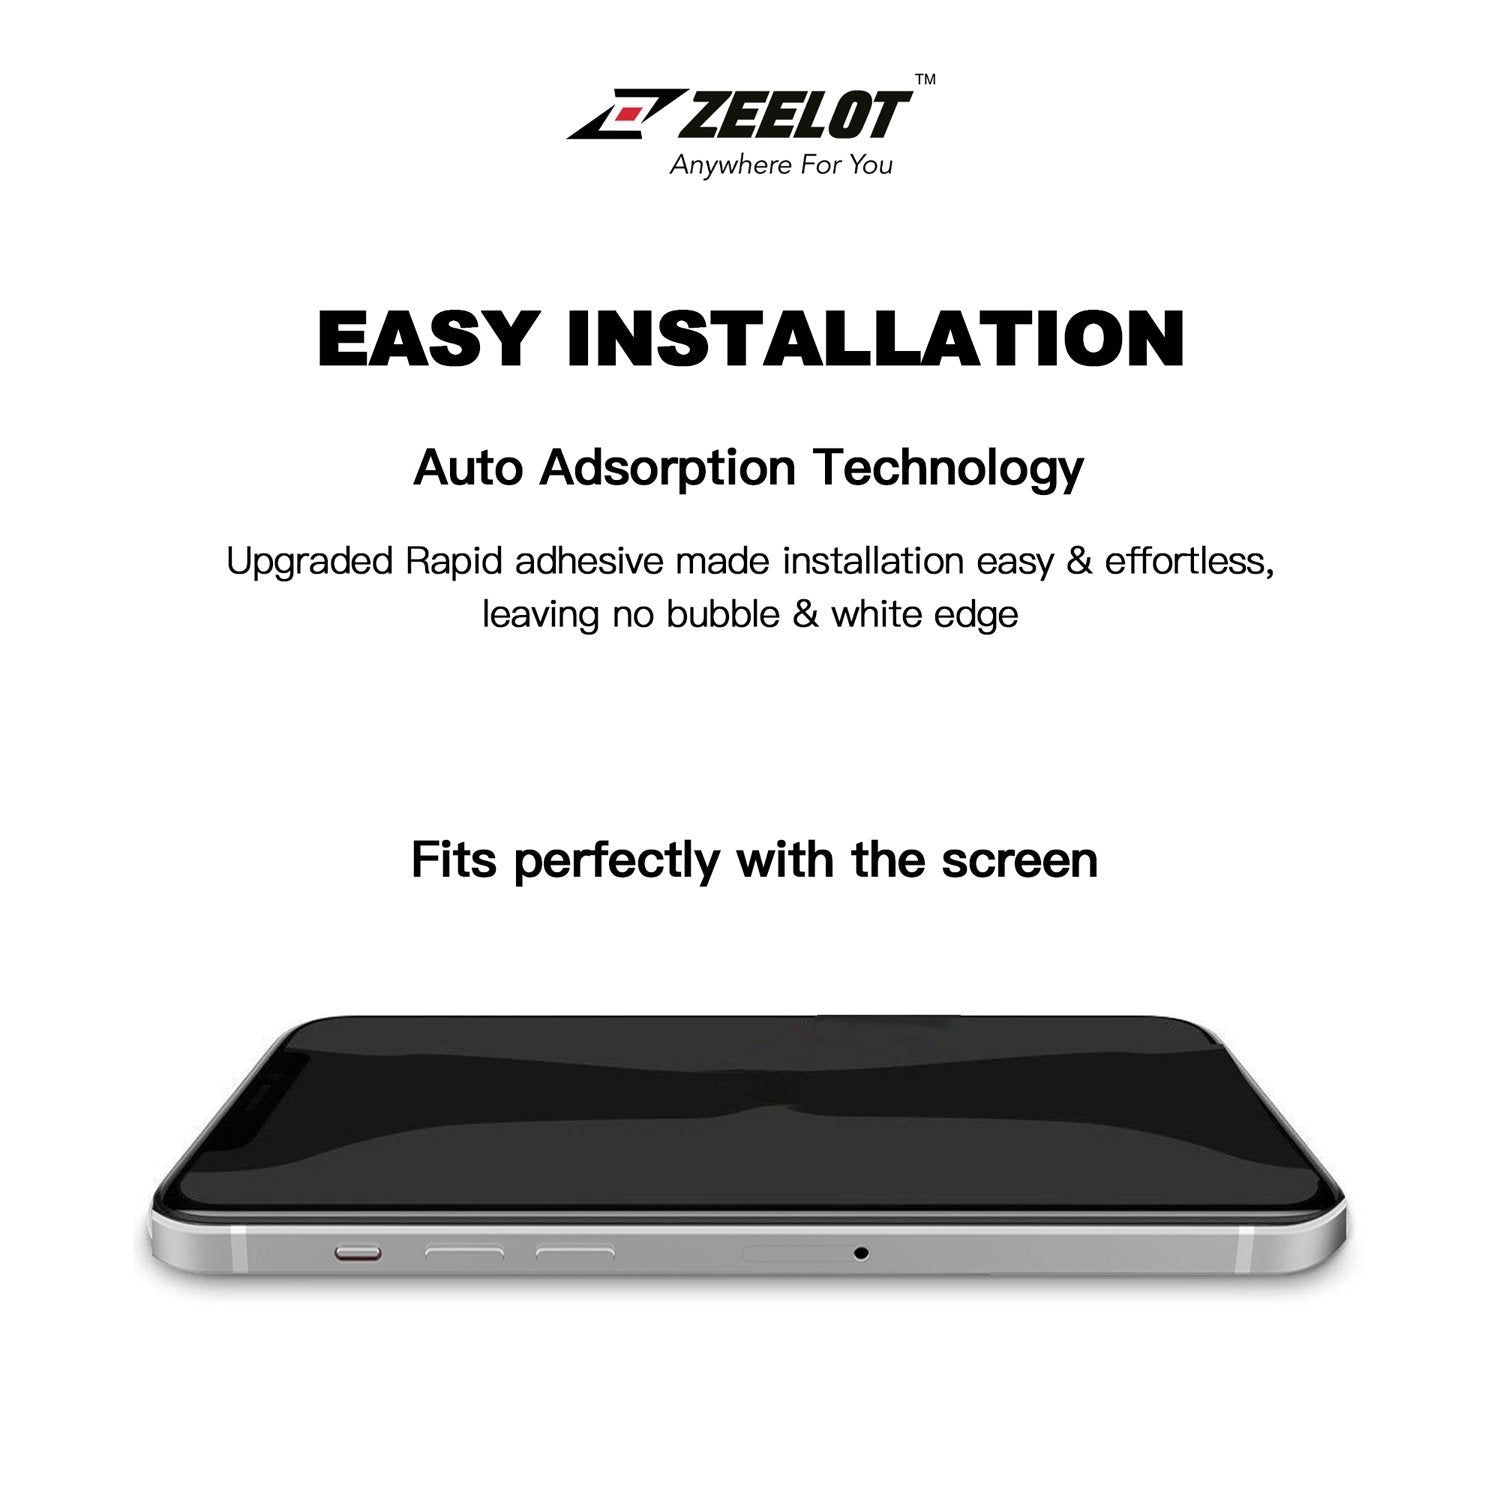 ZEELOT PureGlass Stereoscopic Tempered Glass Screen Protector for iPhone 12 mini 5.4" (2020), Clear Default ZEELOT 